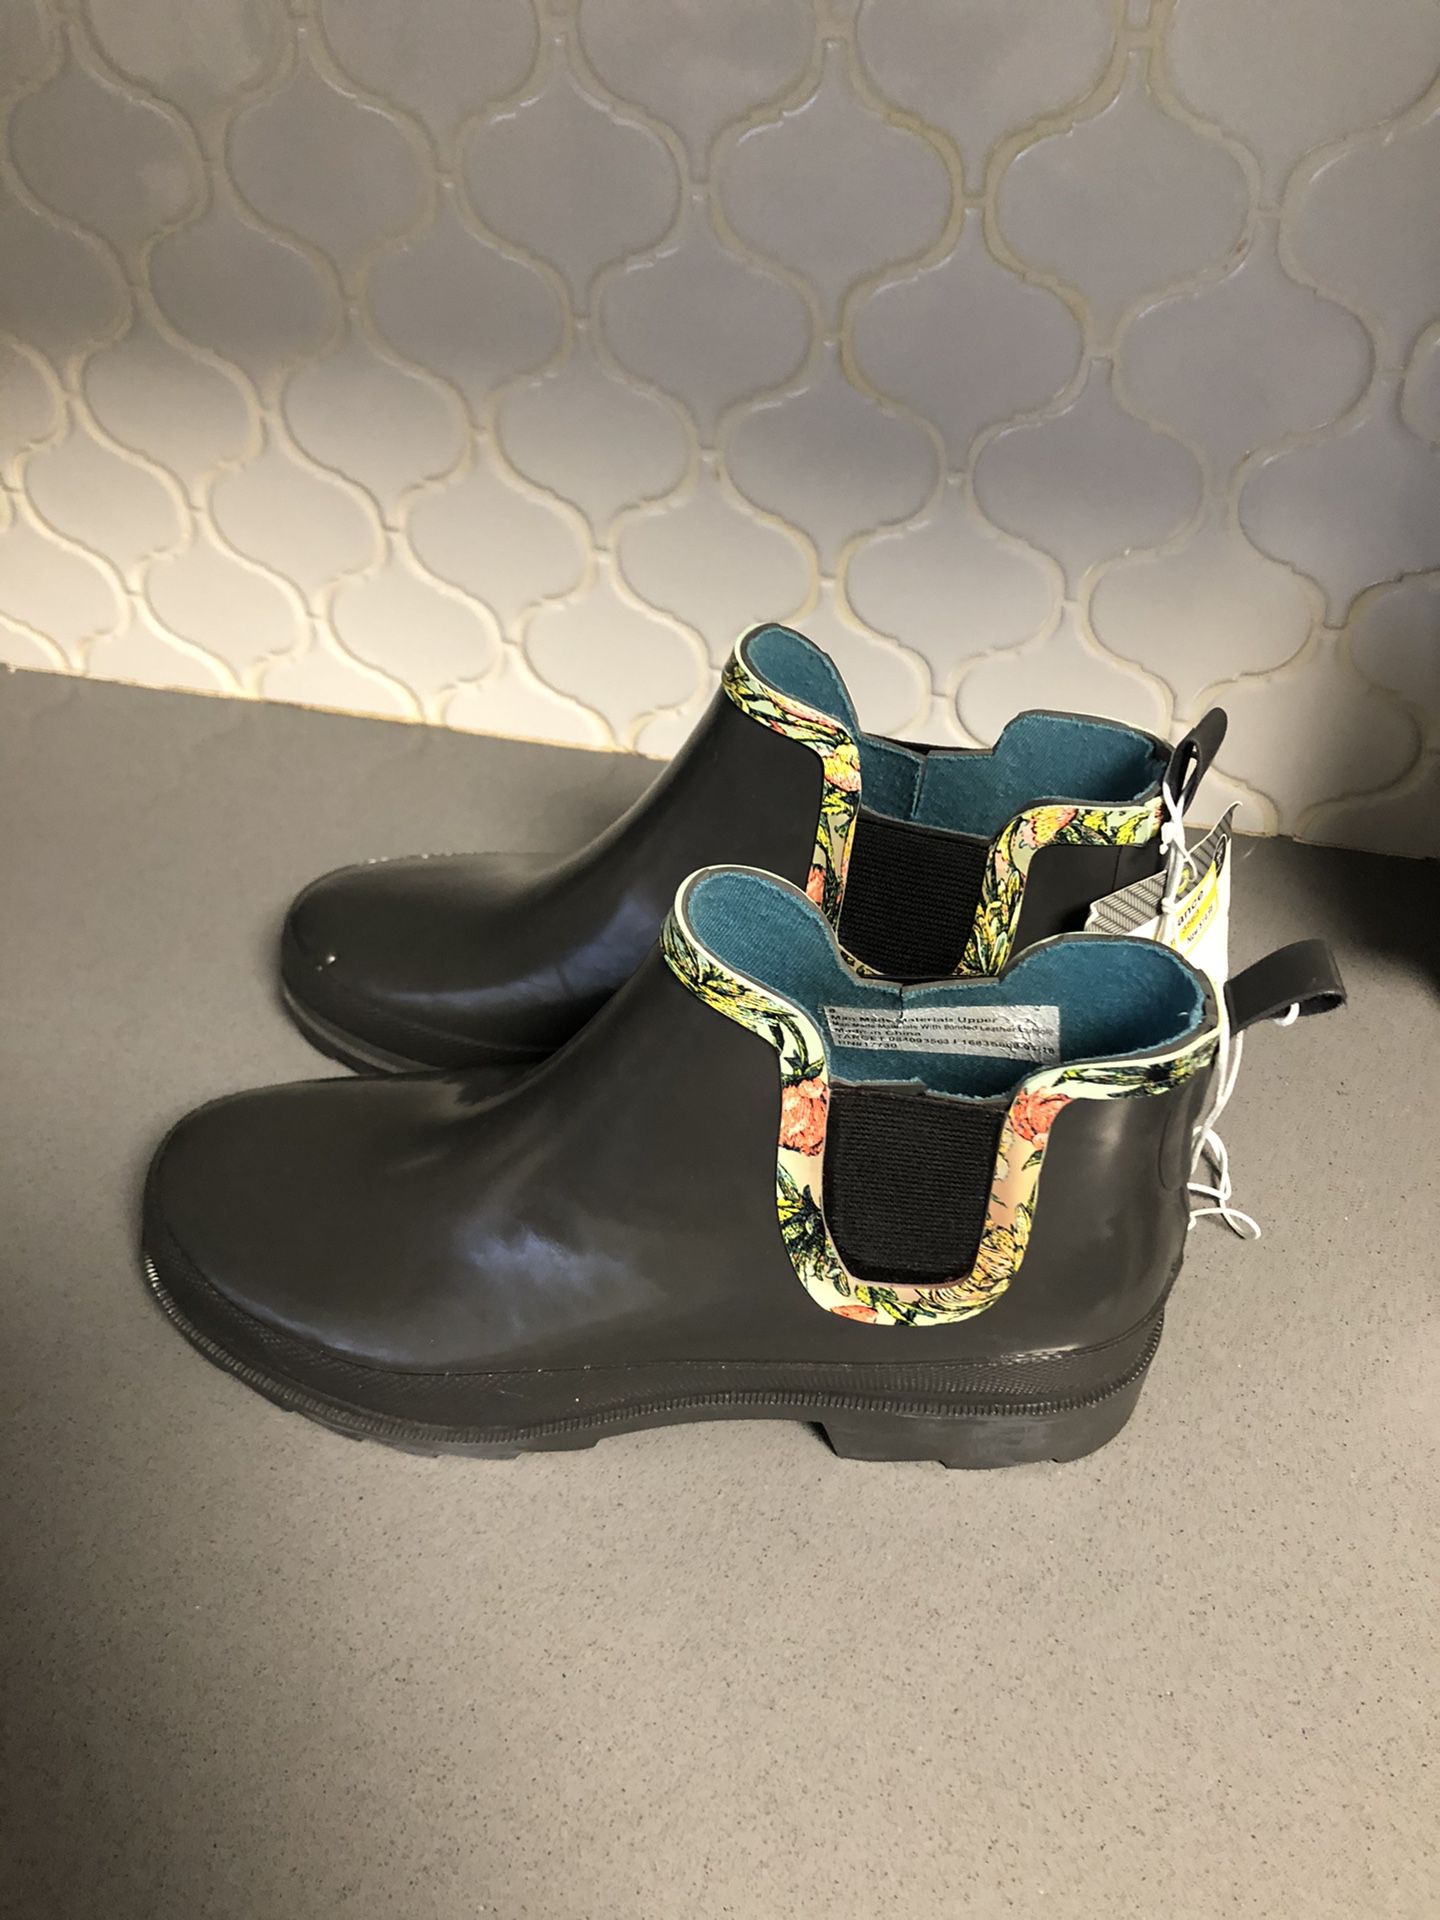 Garden/Rain Boots